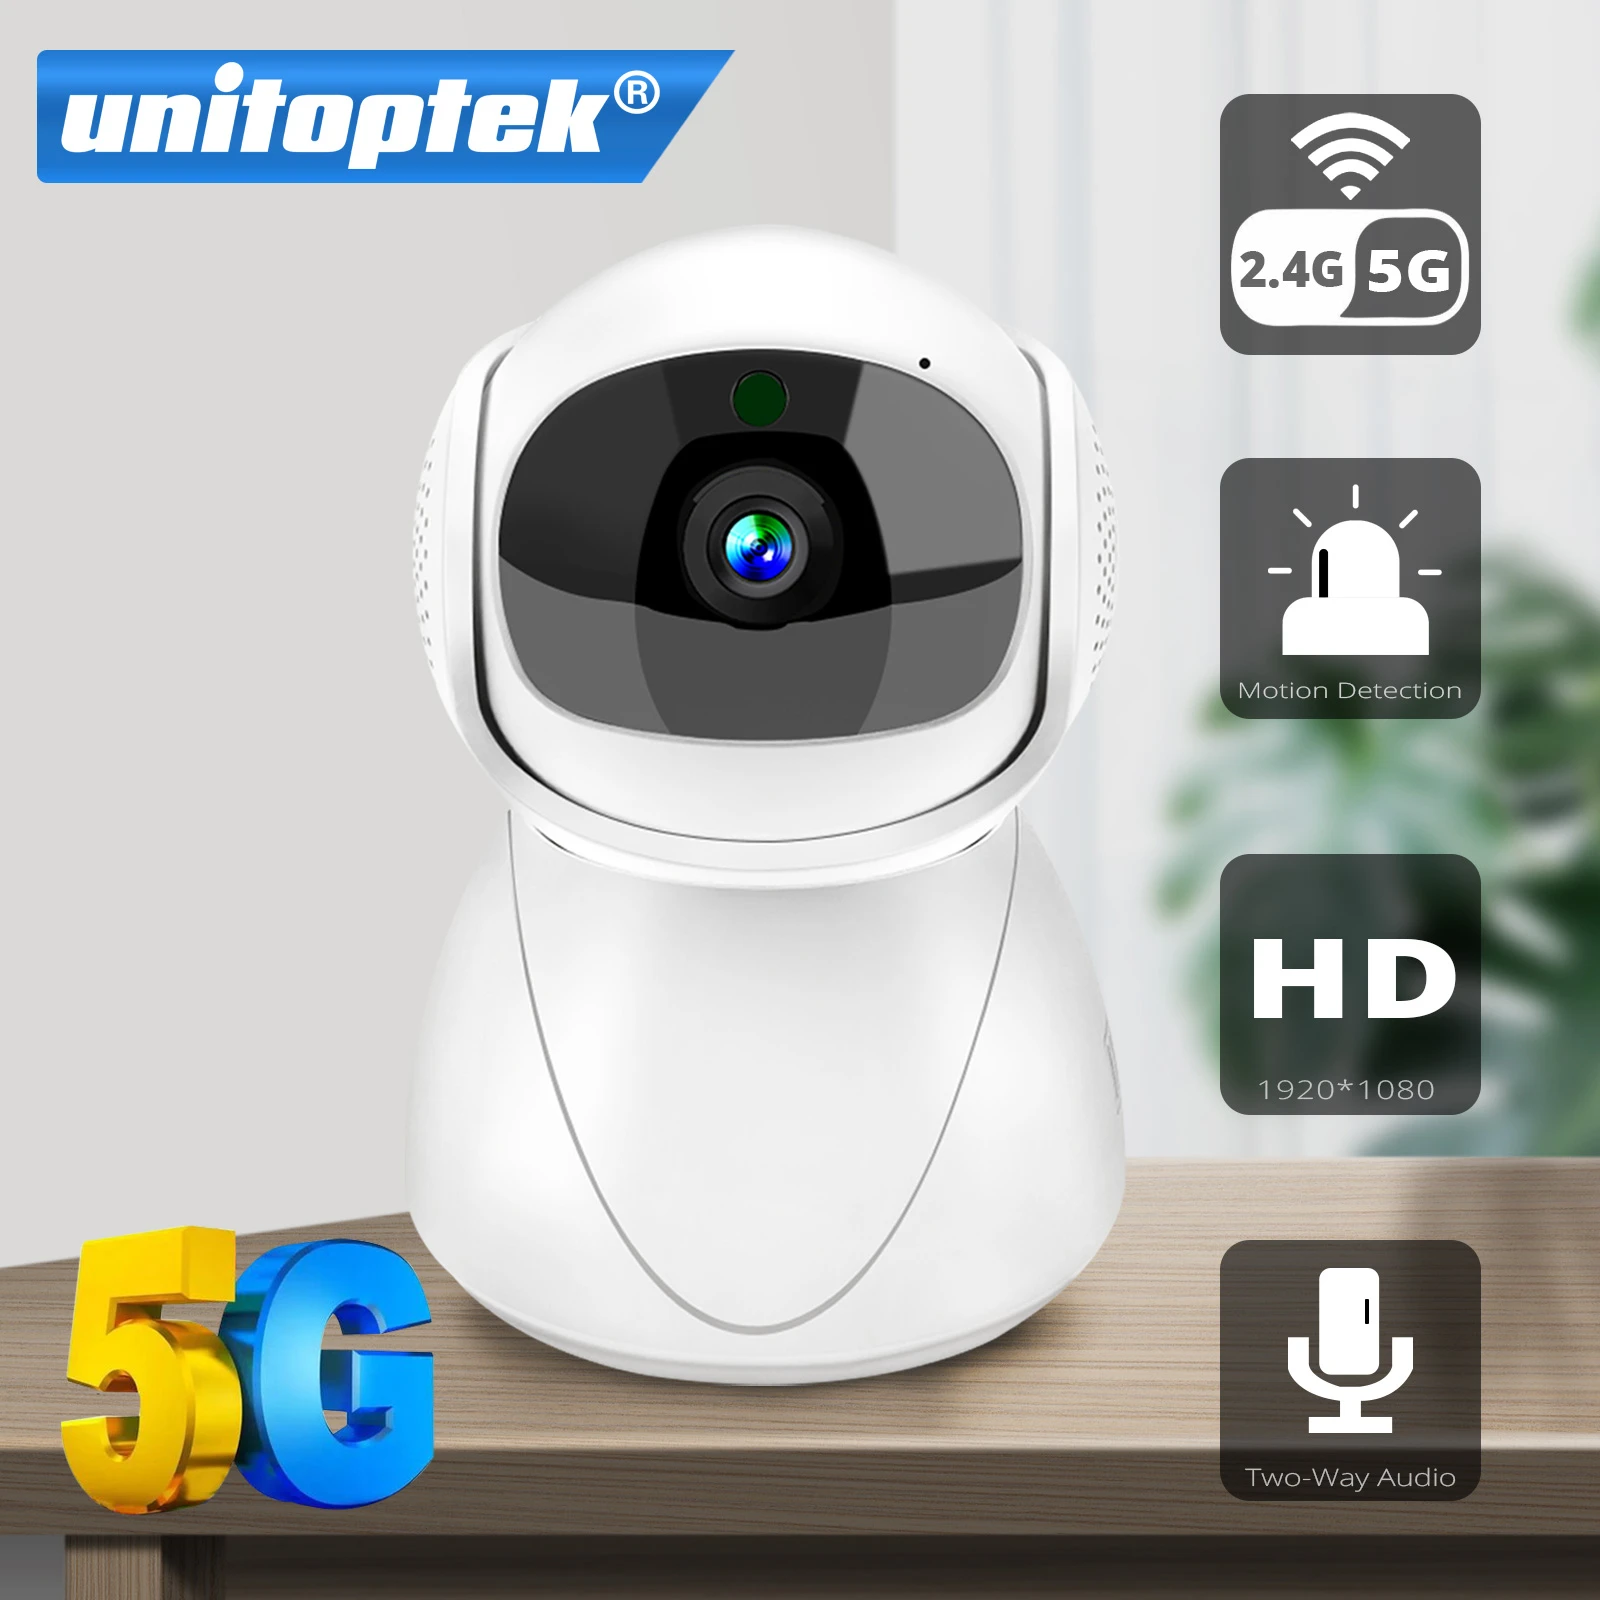 1080P HD Wireless IP Camera Home Security Smart WiFi Audio CCTV Night Vision 